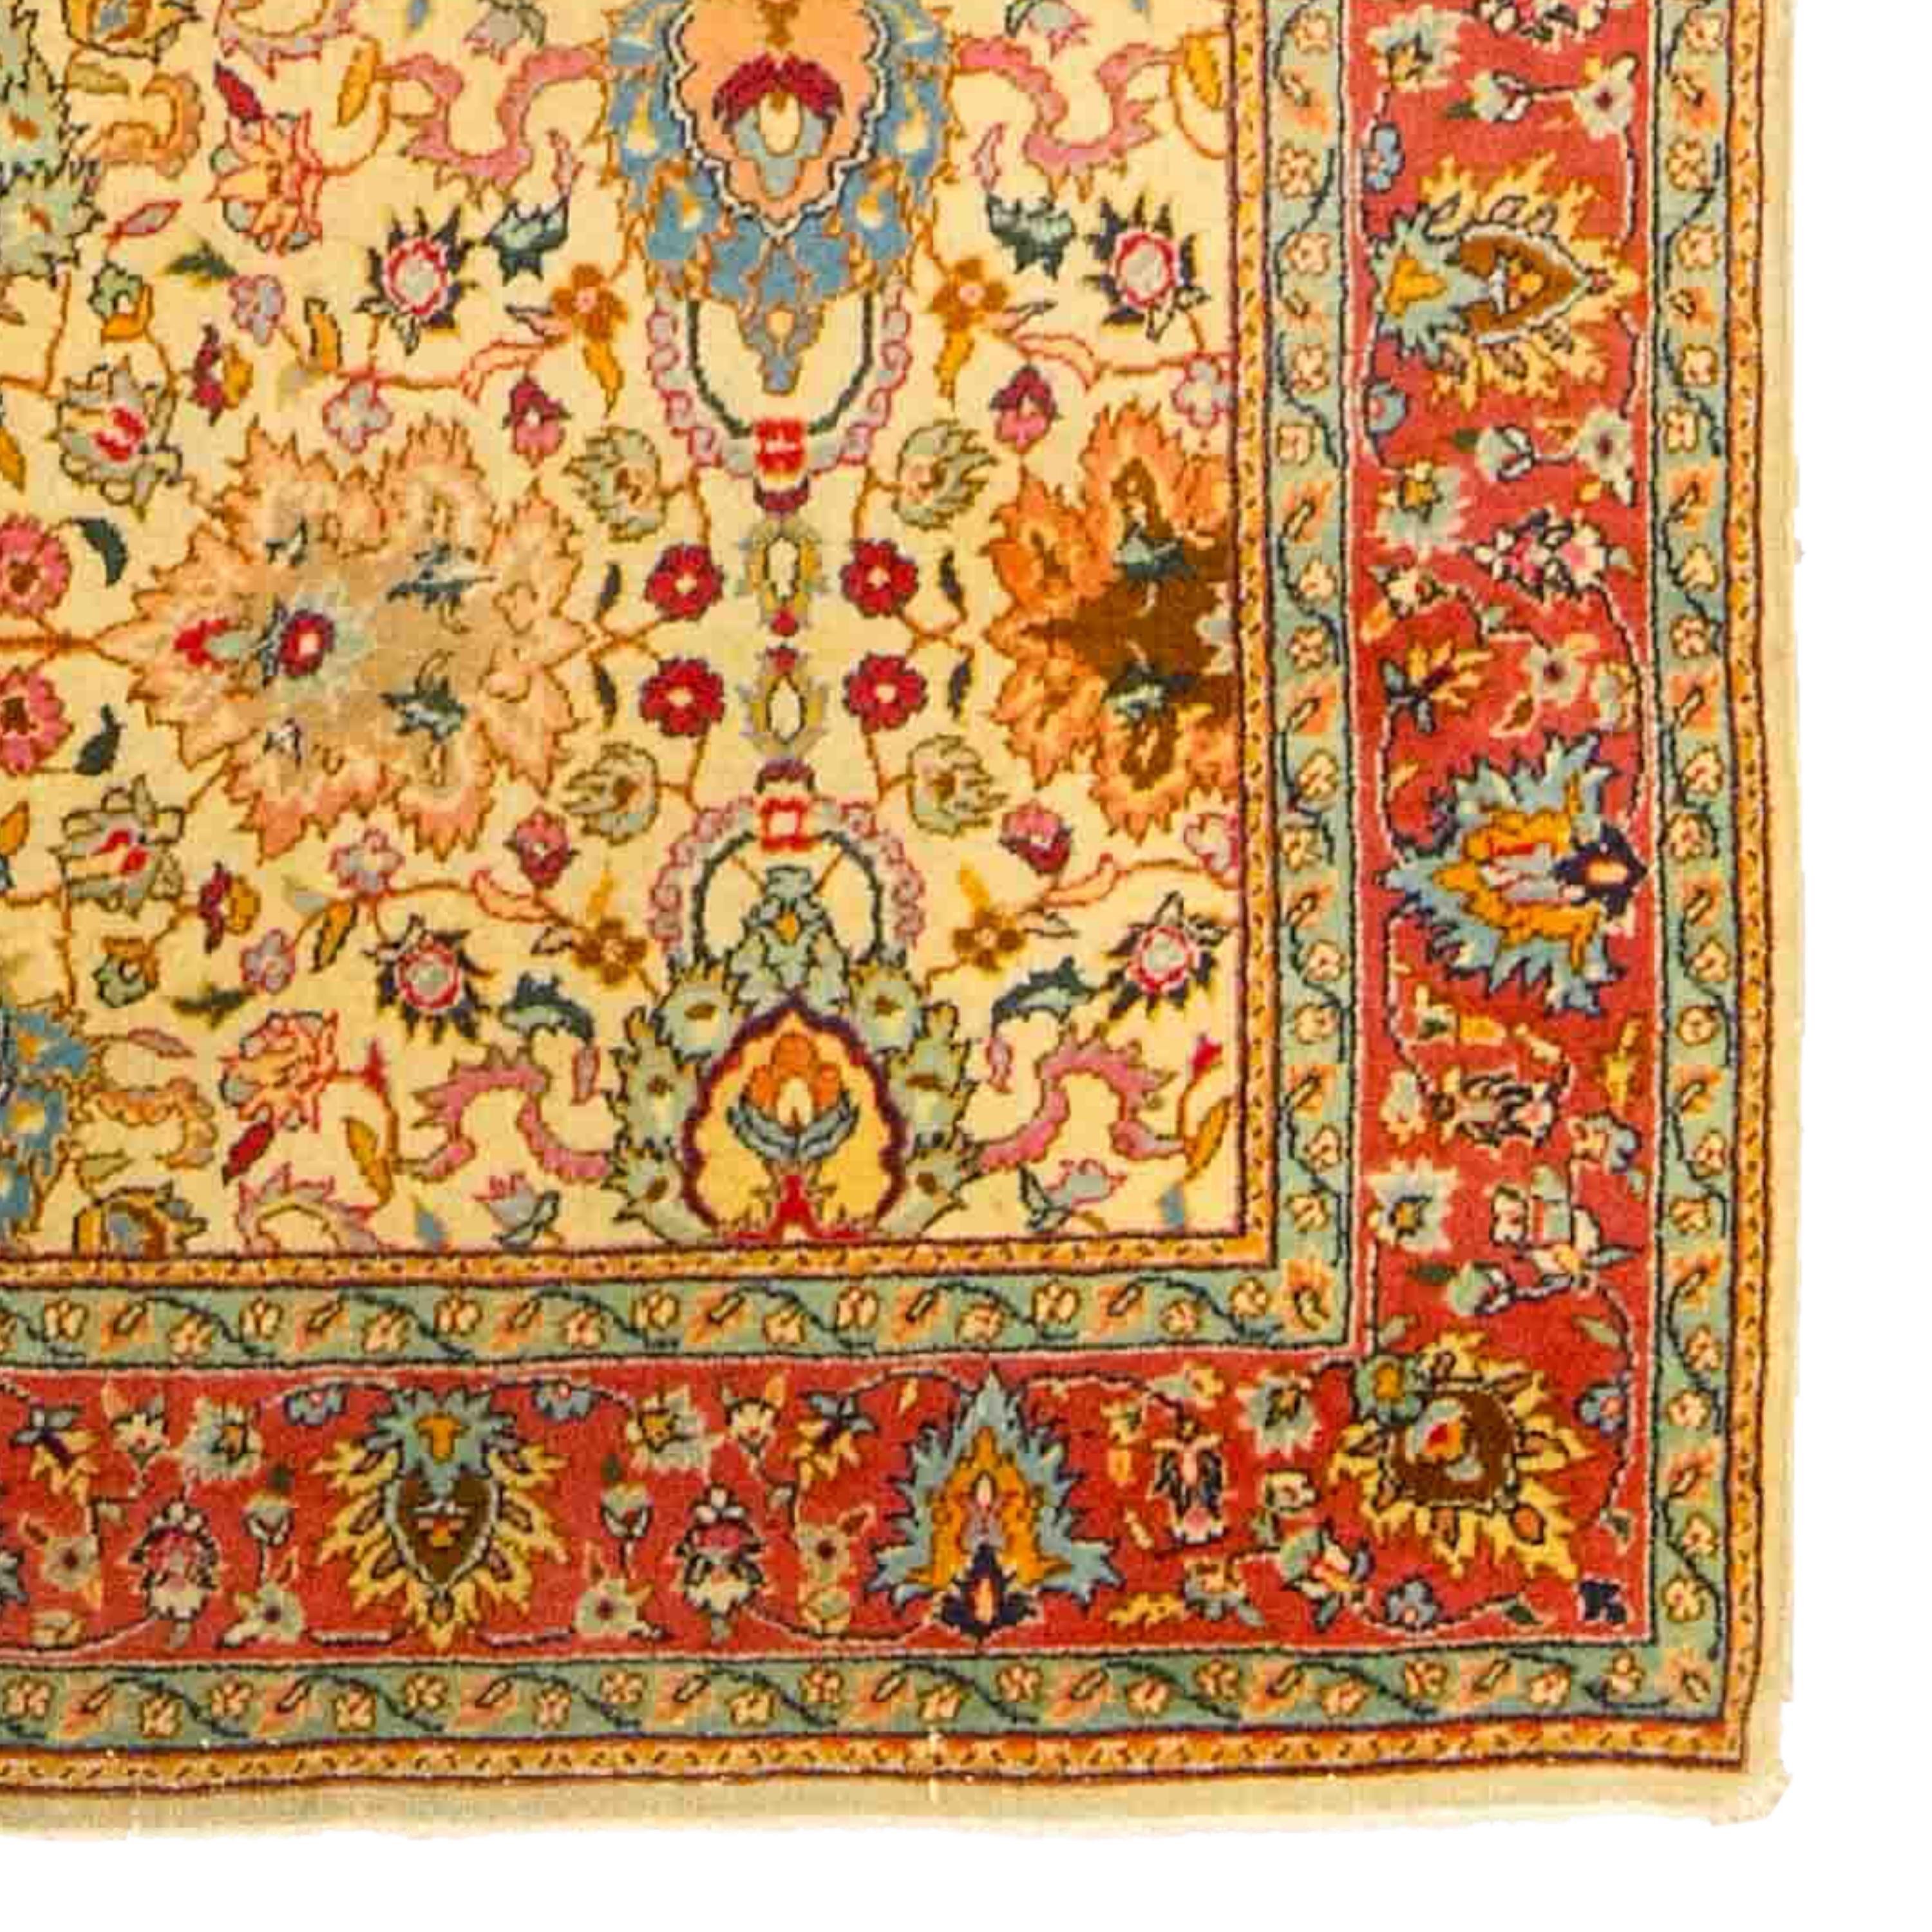 Wool Antique Tabriz Rug - Late of 19th Century Azerbaijan Tebriz Rug For Sale